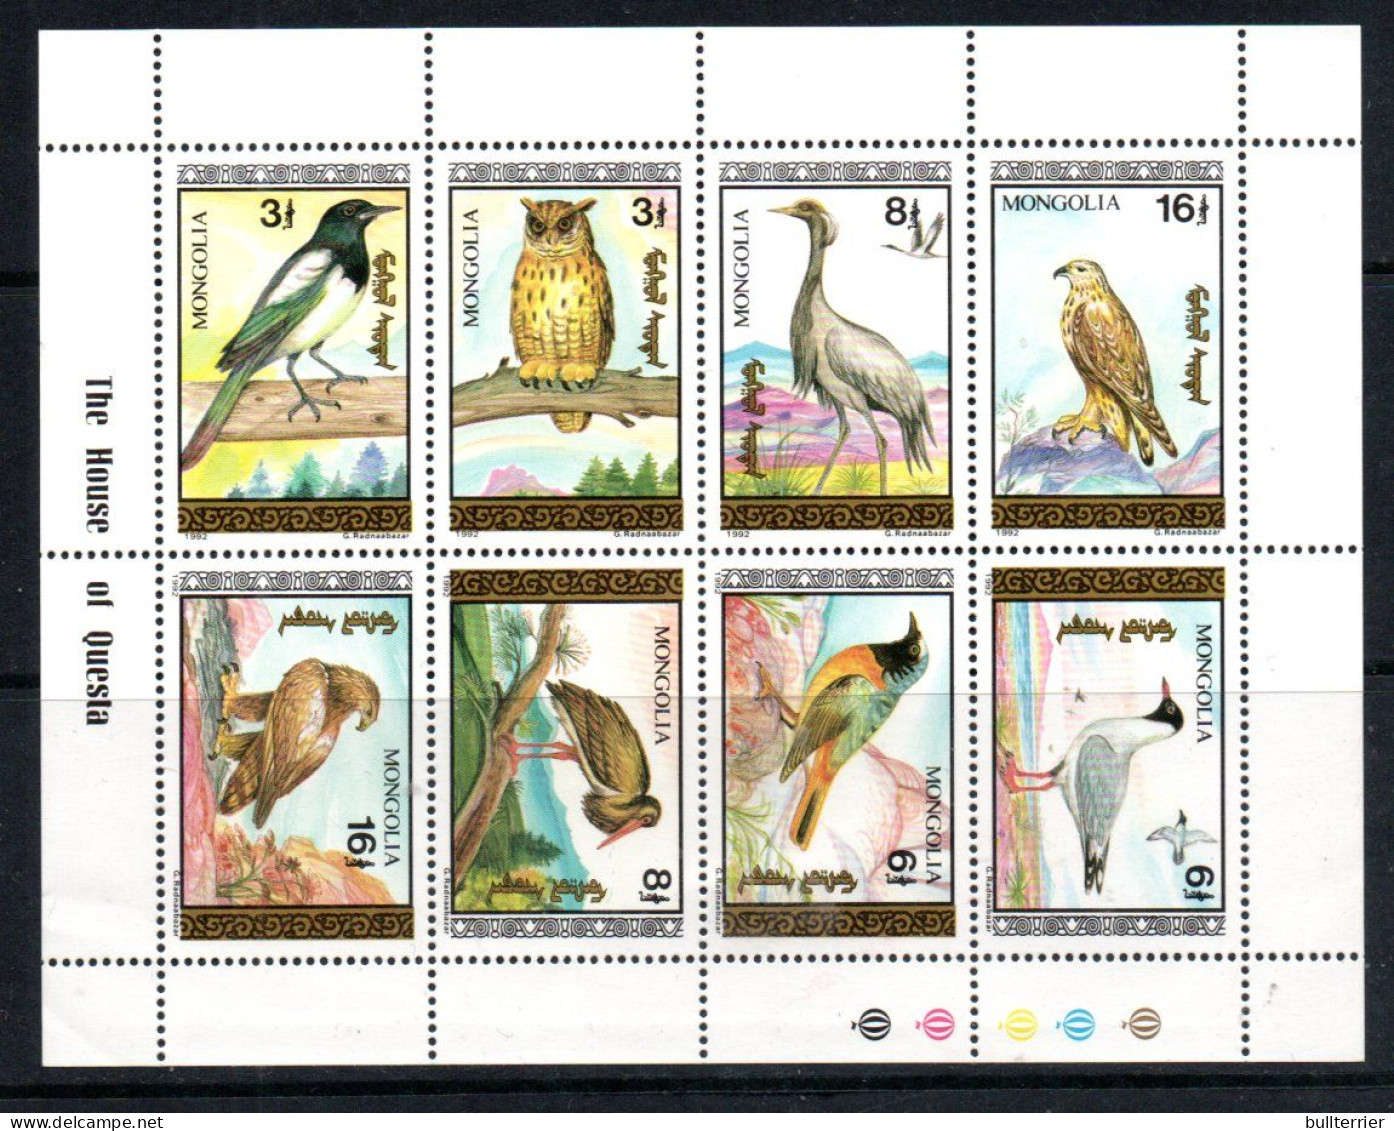 BIRDS - Mongolia- 1992- Birds Sheetlet Of 8 Mint Never Hinged, SG Cat £21.10 - Tauben & Flughühner